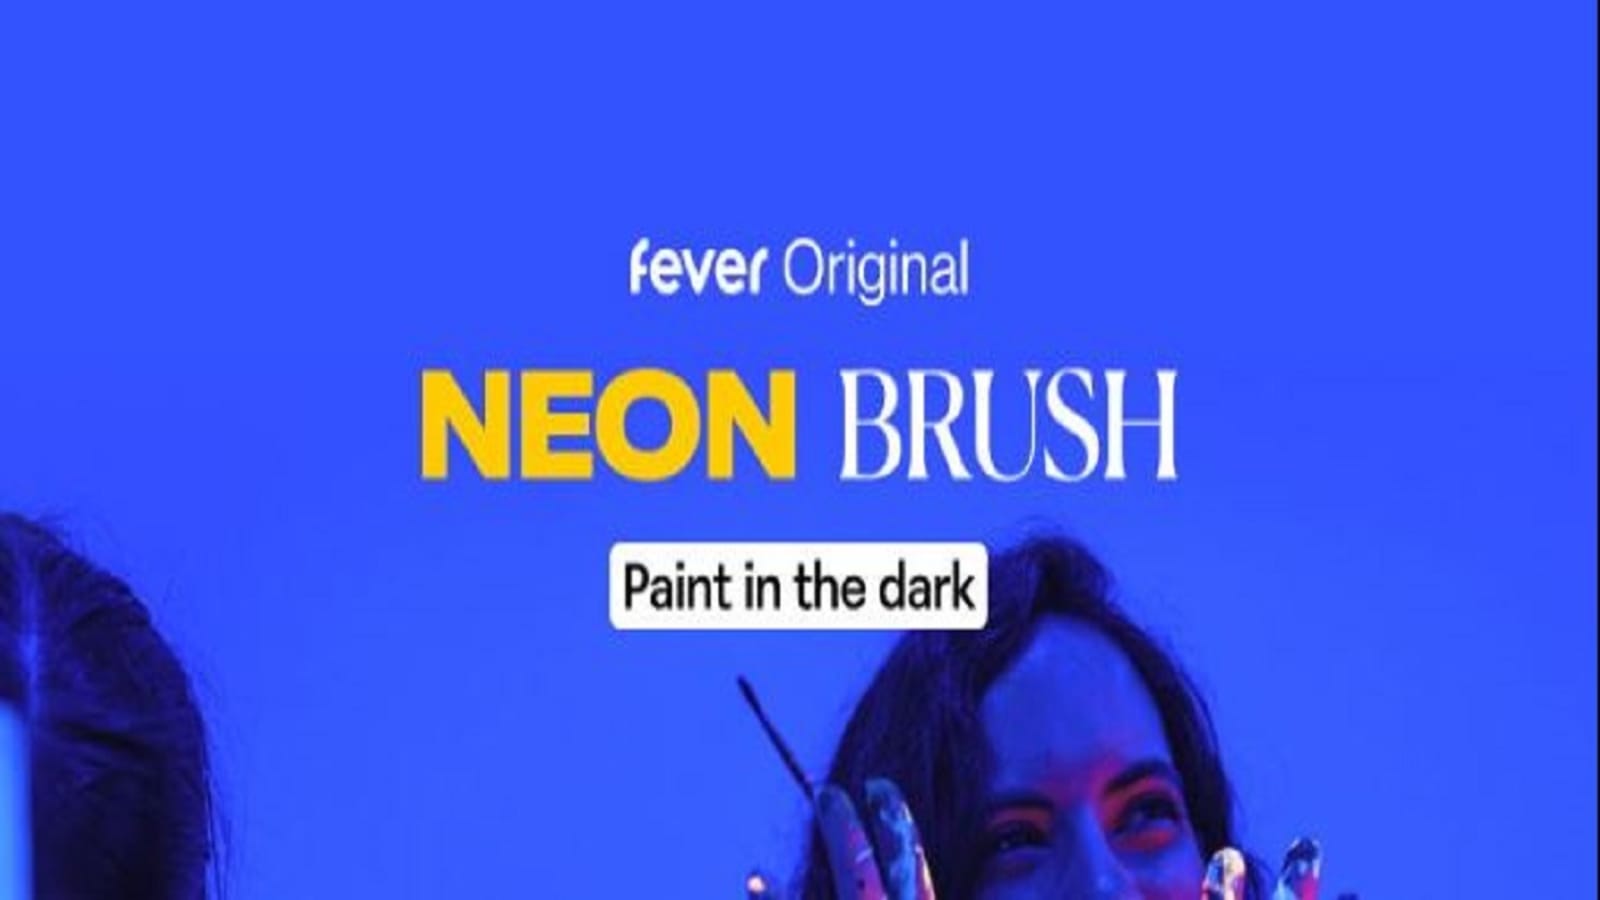 Neon Brush: Sip & Paint Workshop in the Dark